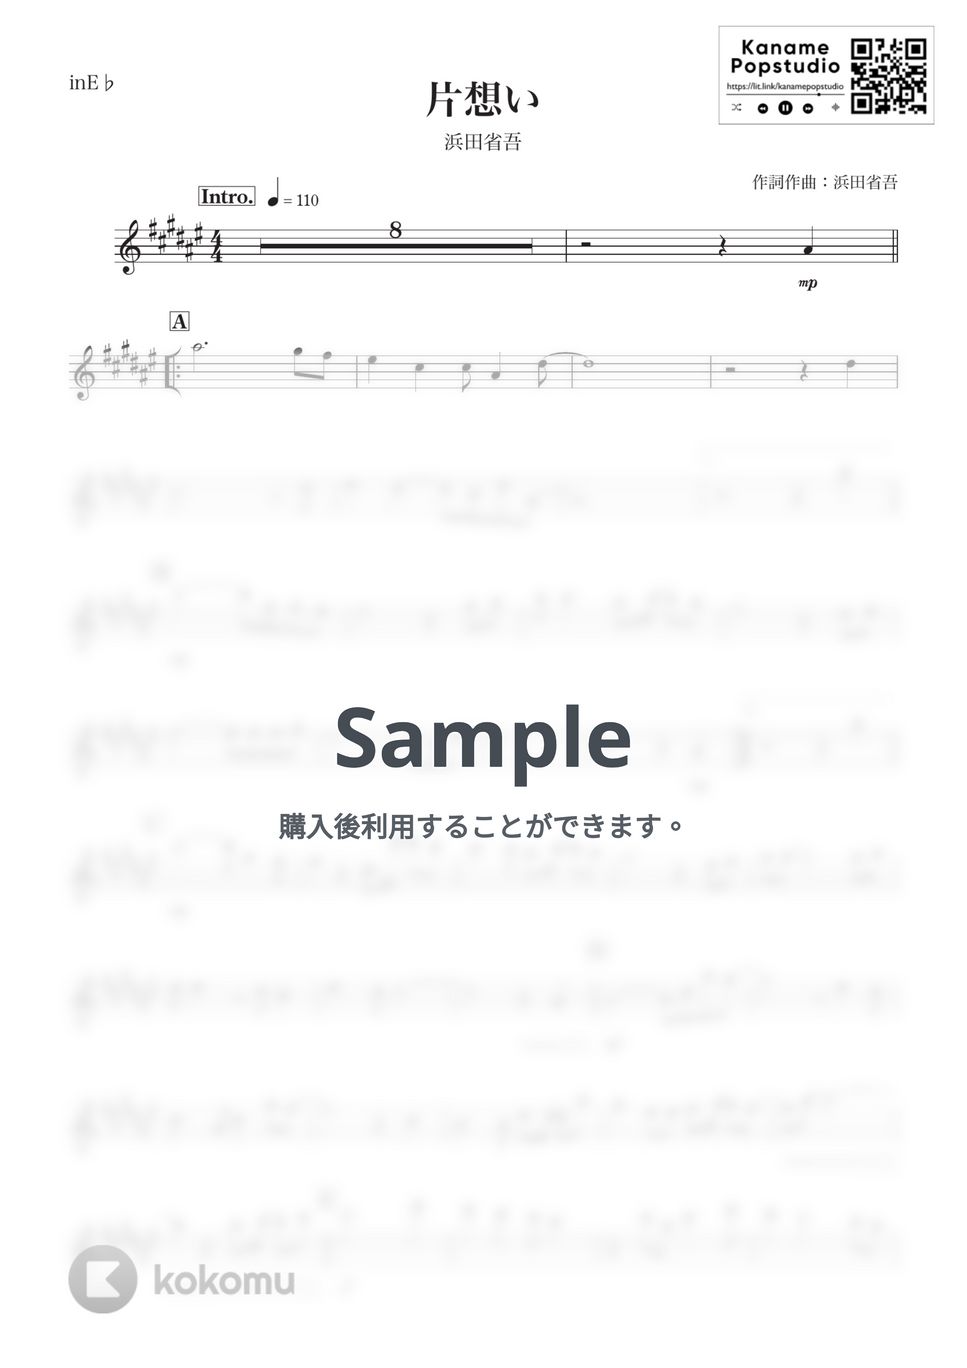 浜田省吾 - 片想い (E♭) by kanamusic